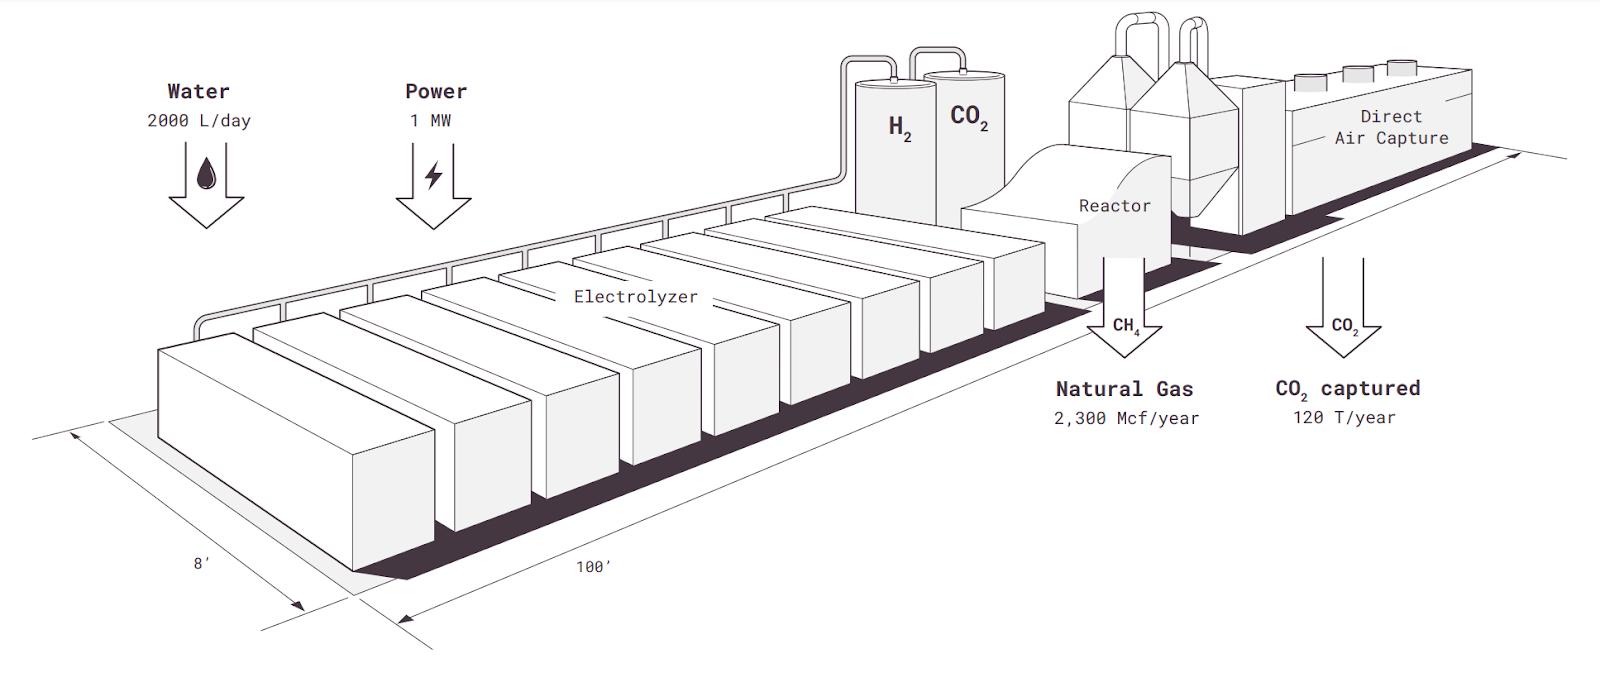 Schematic representation of Terraform's hydrogen production facility